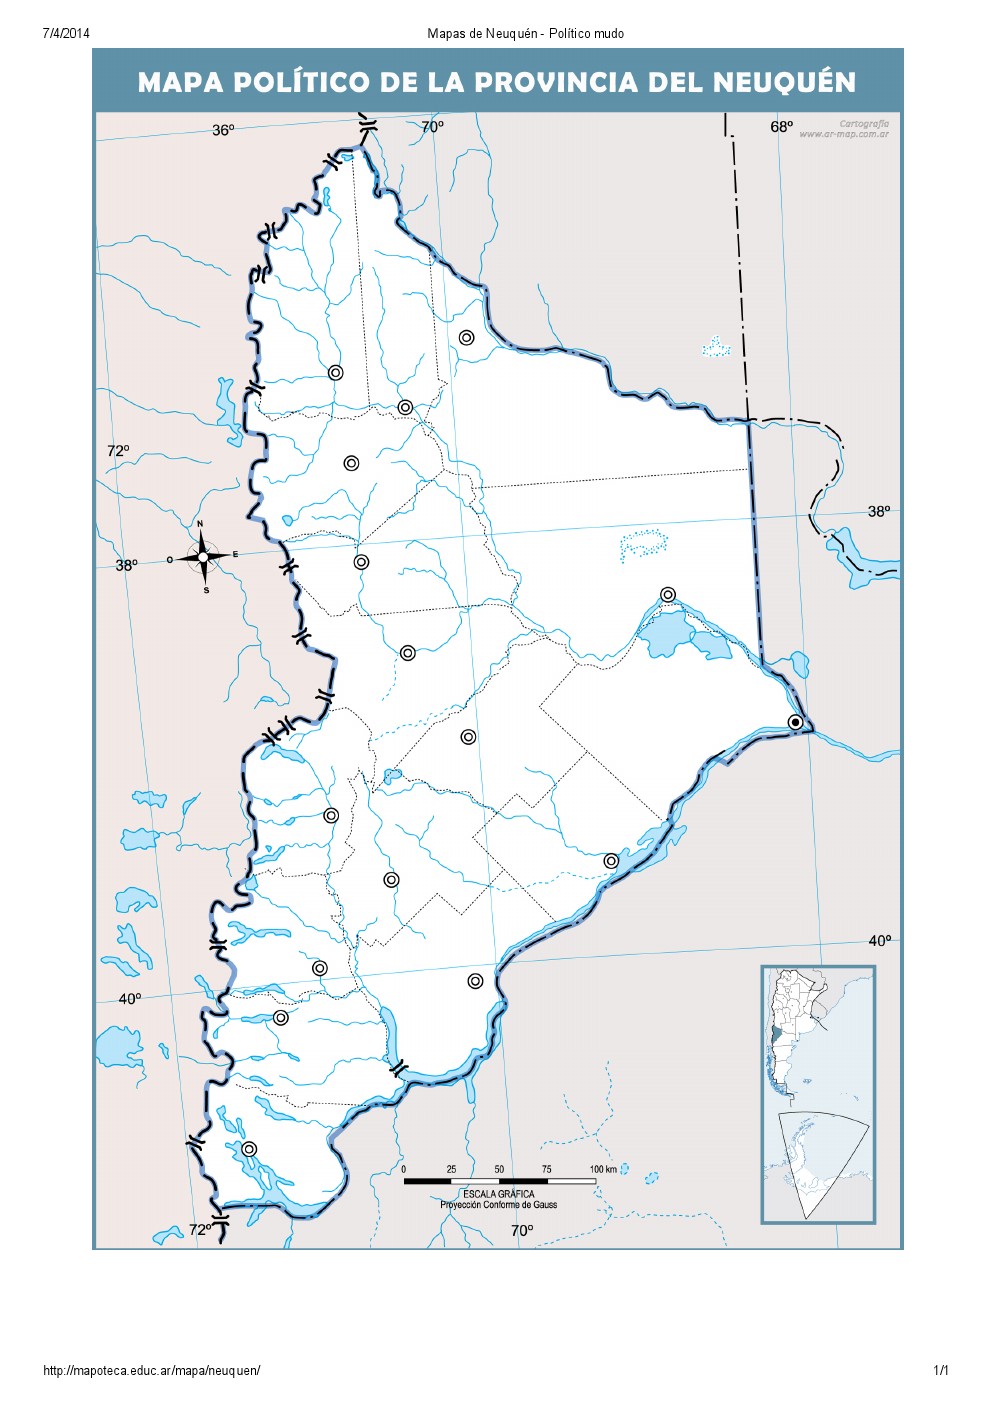 Mapa mudo de capitales de Neuquén. Mapoteca de Educ.ar